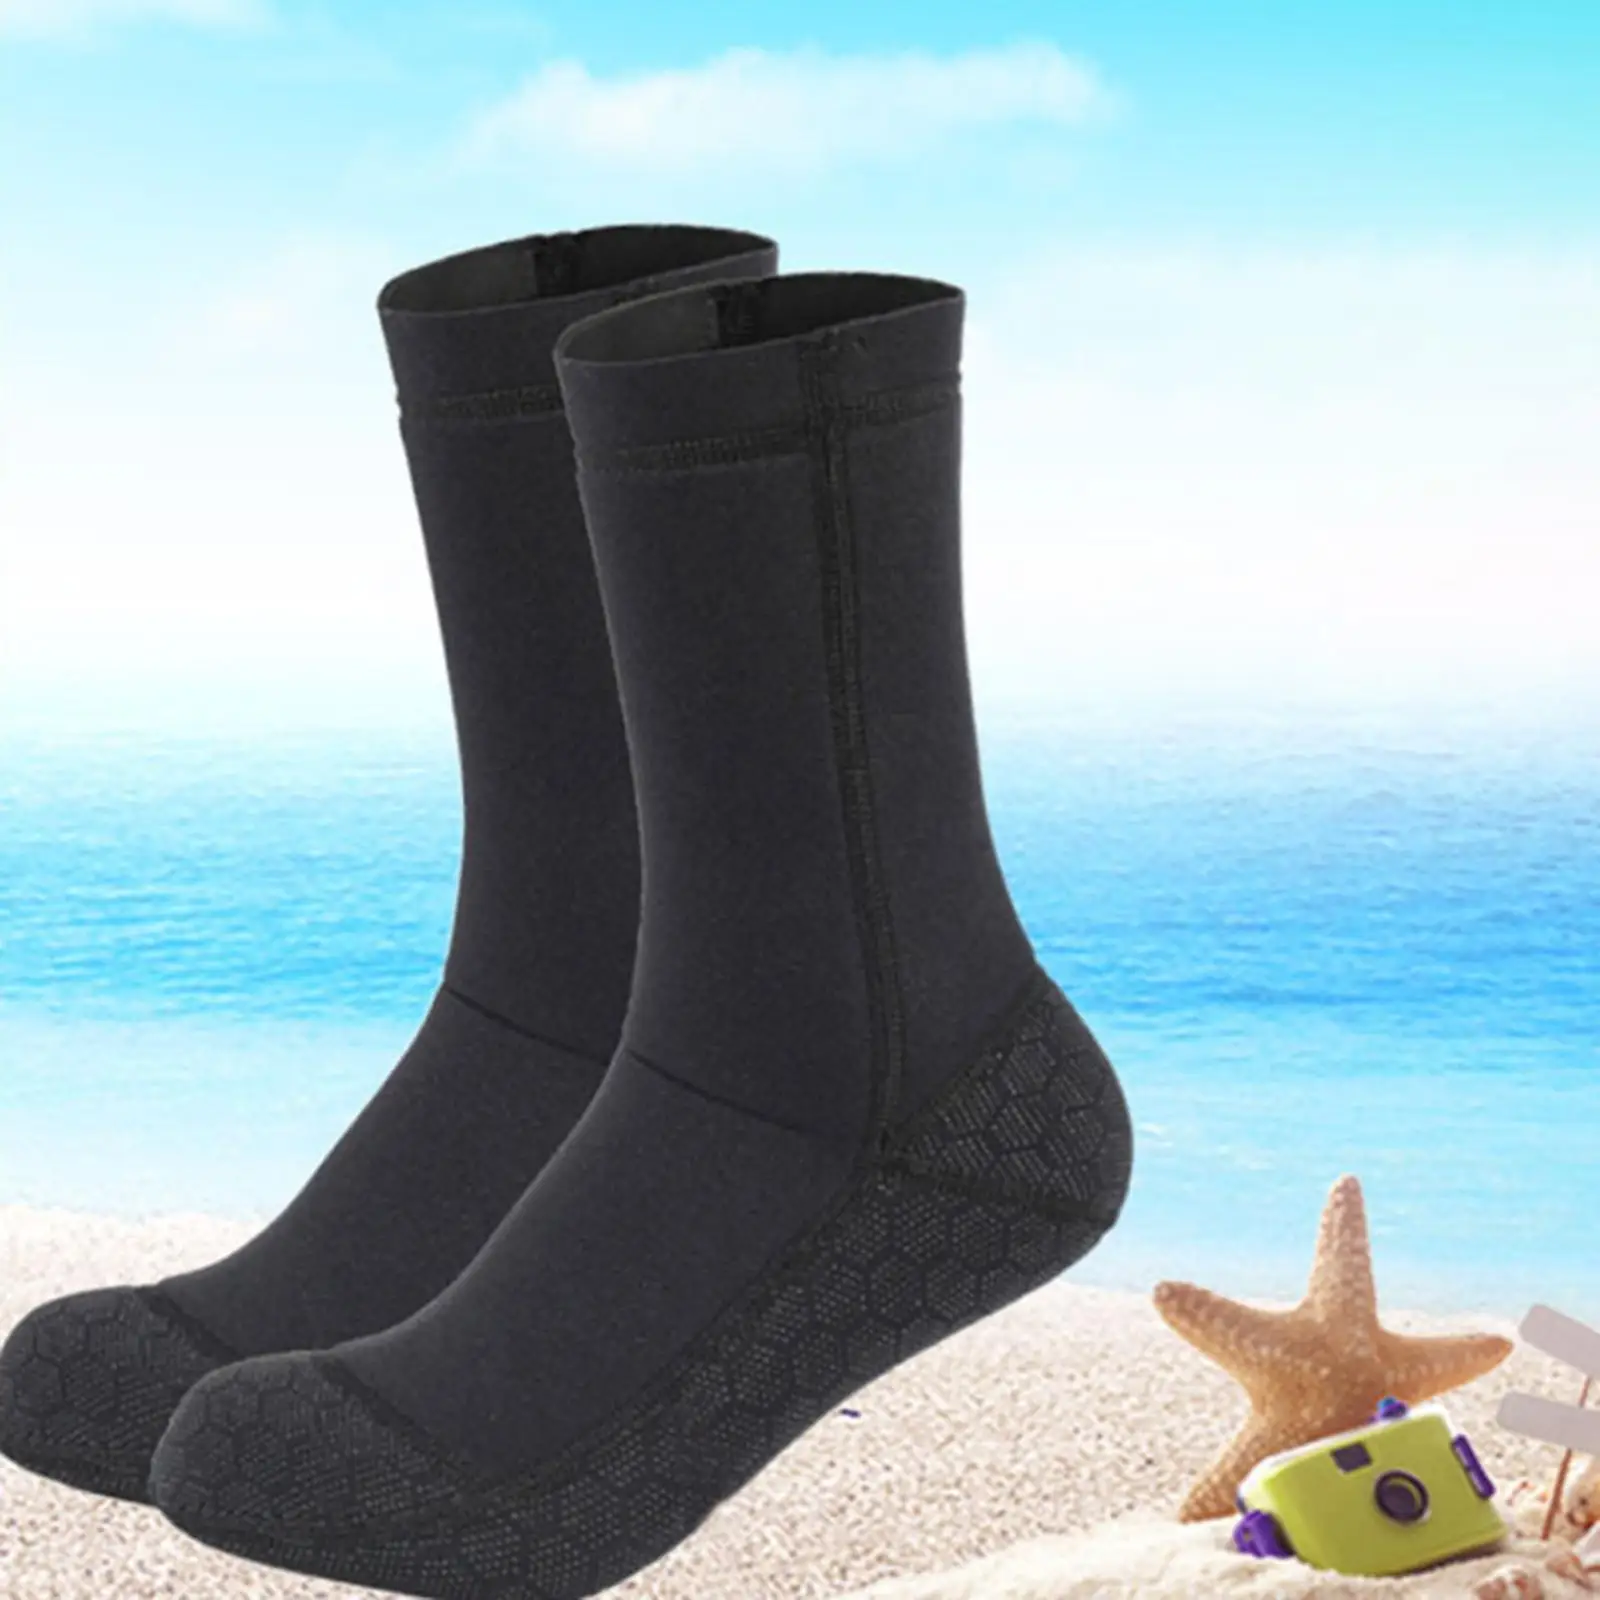 Scuba Diving Socks Sand Proof Water Socks Beach Fin Socks for Sailing Surfing Unisex Adult